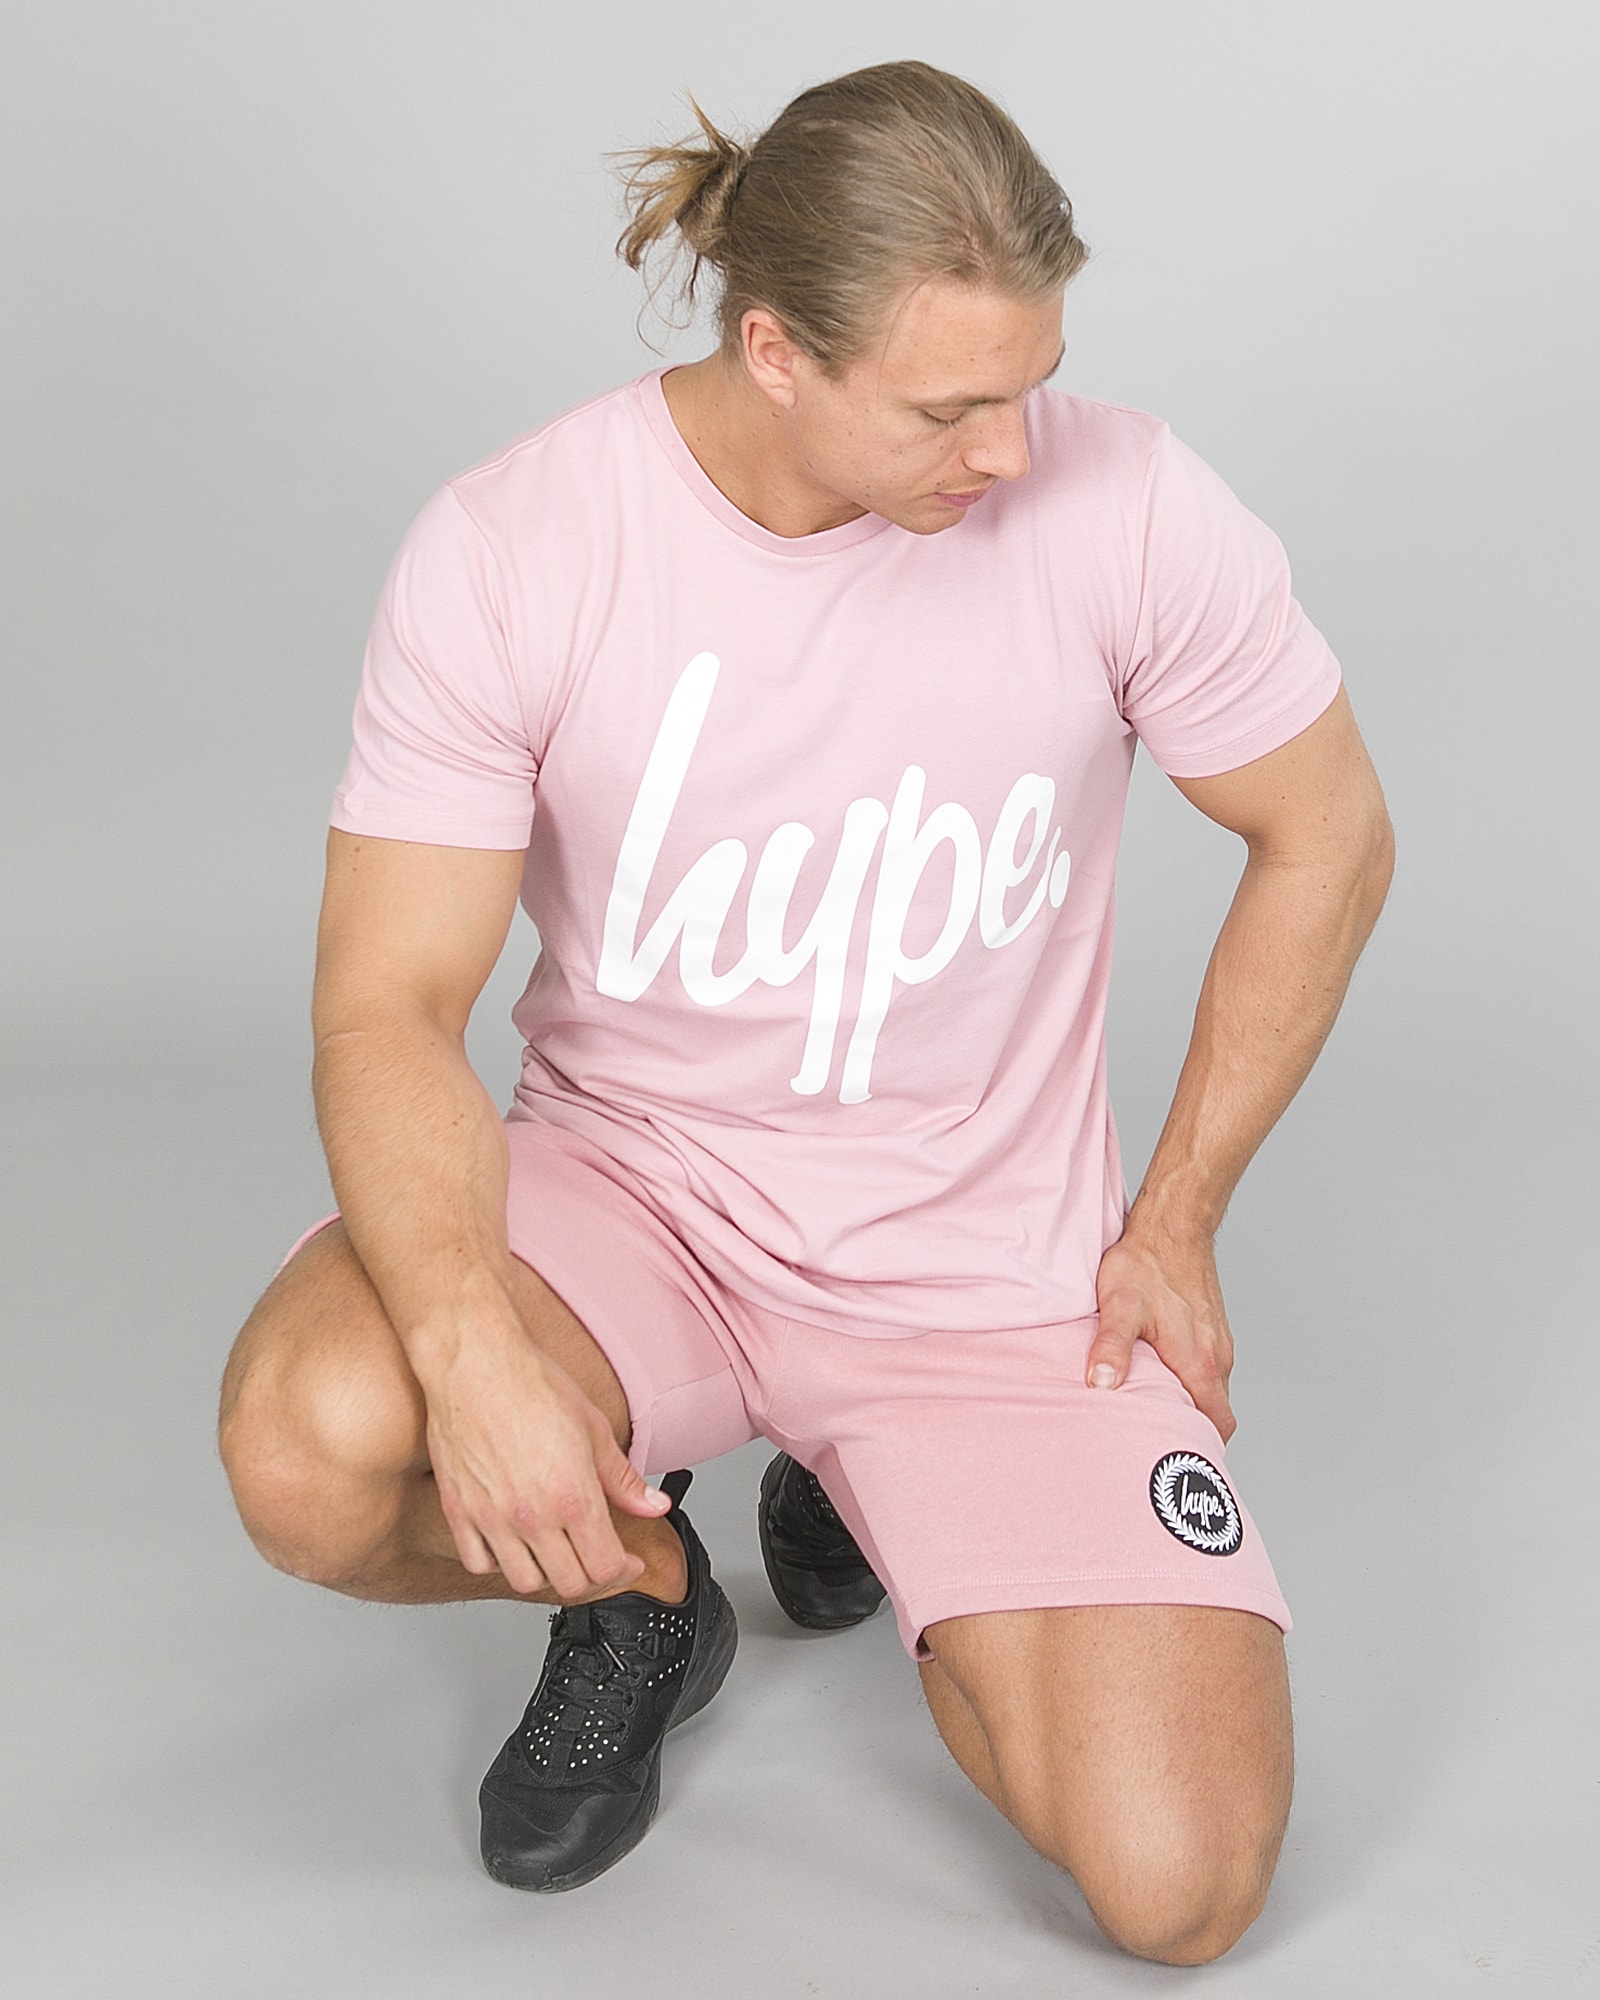 Hype Script T-Shirt Men ss18004 Pink and Crest Shorts ss18330 Pink j